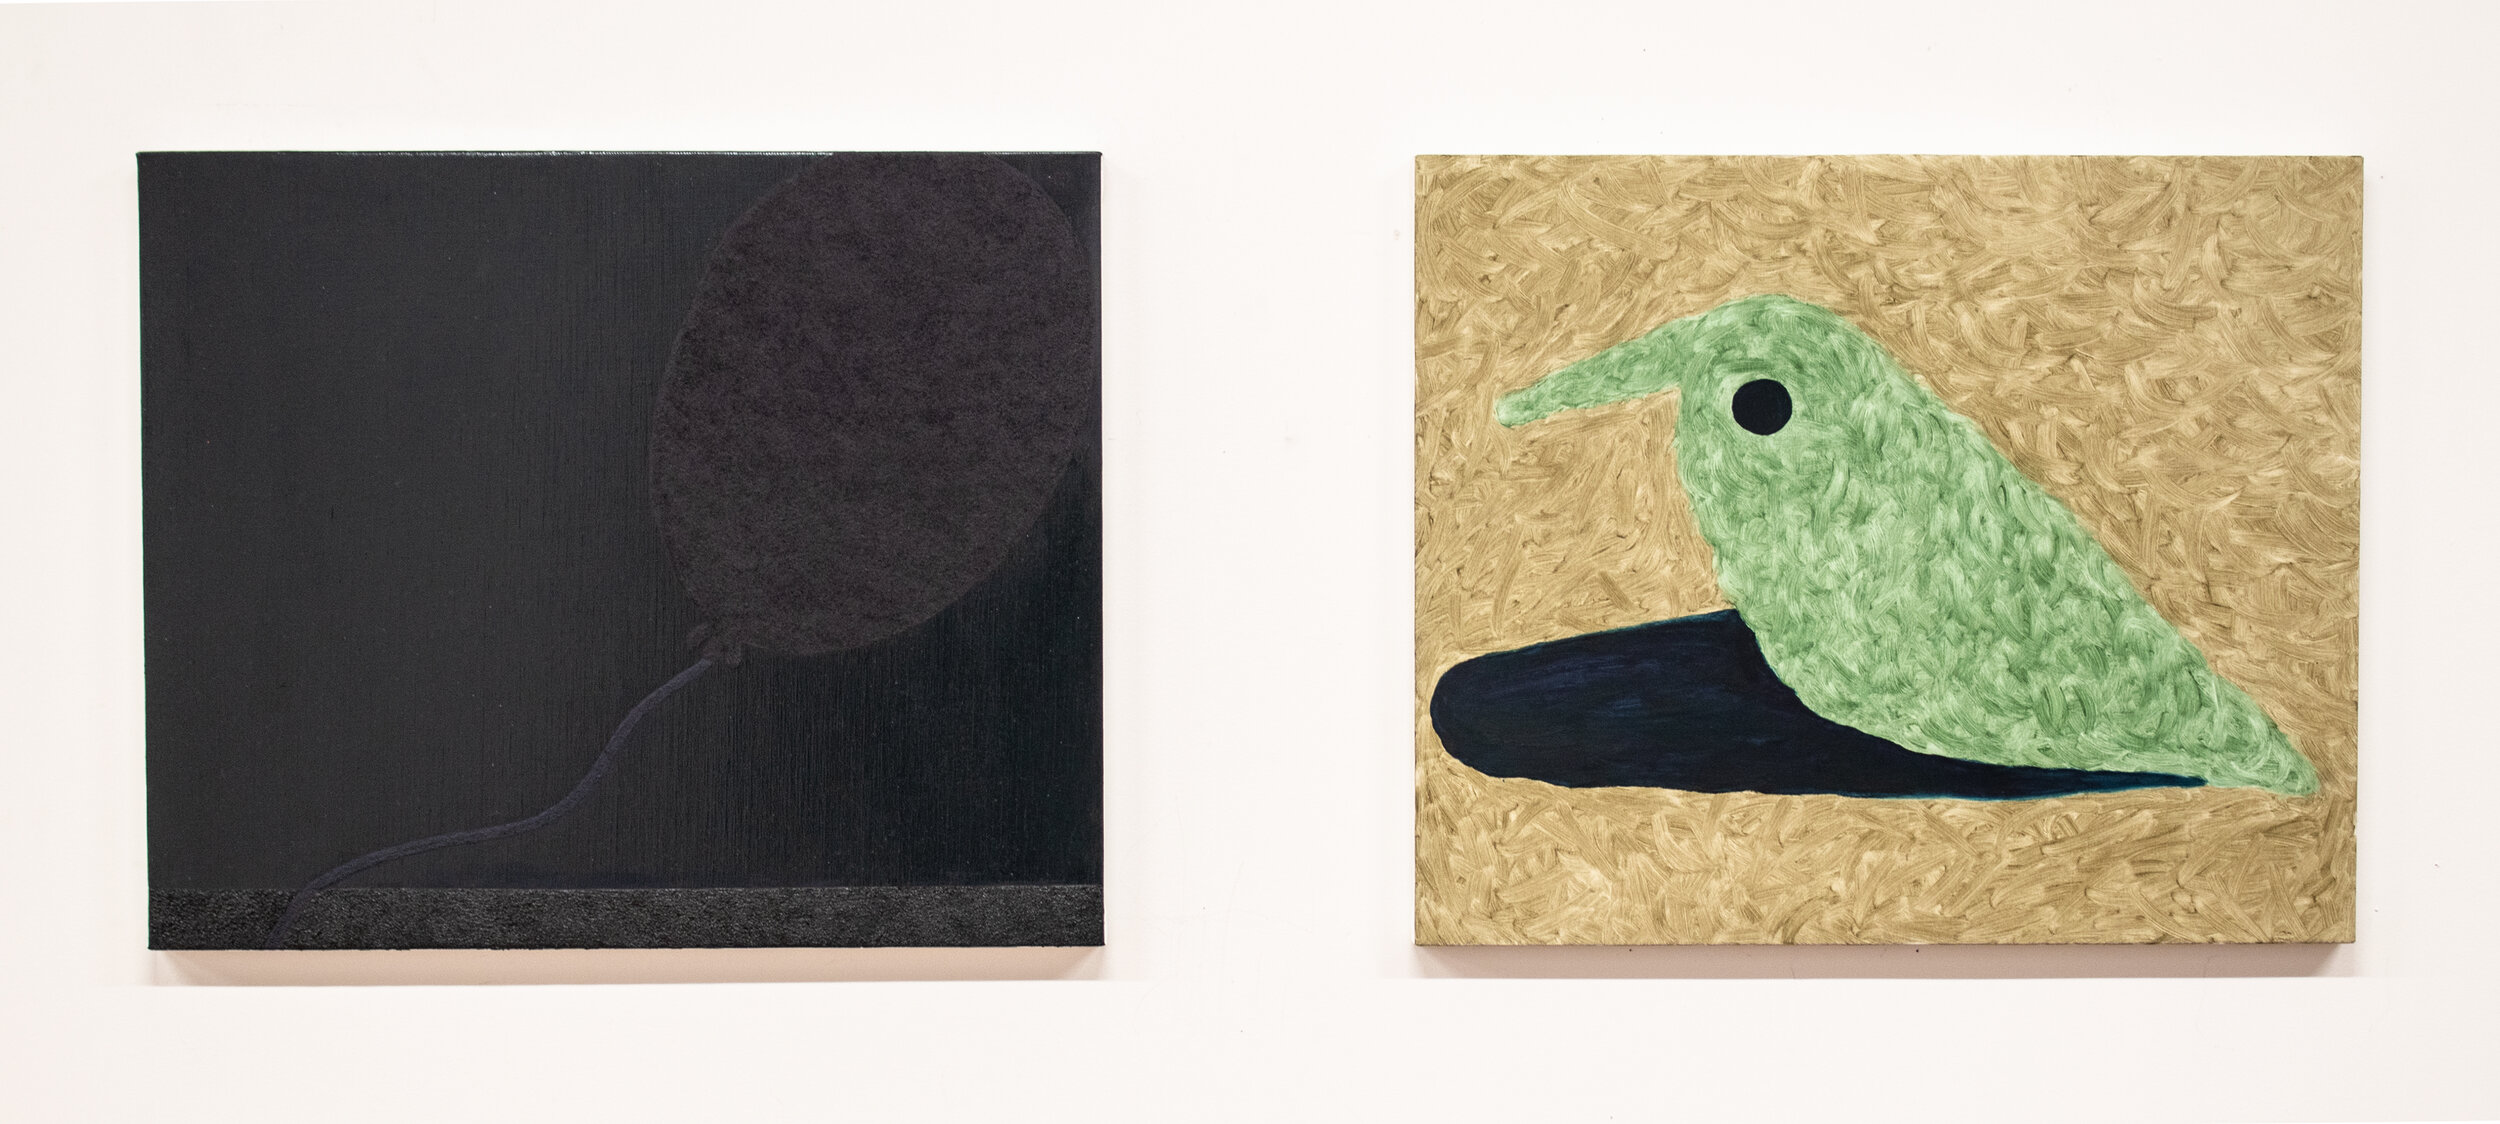  Balloon (II) and Bird (I), 2020-21, Oil on Linen, 20 X 24 (each canvas)  